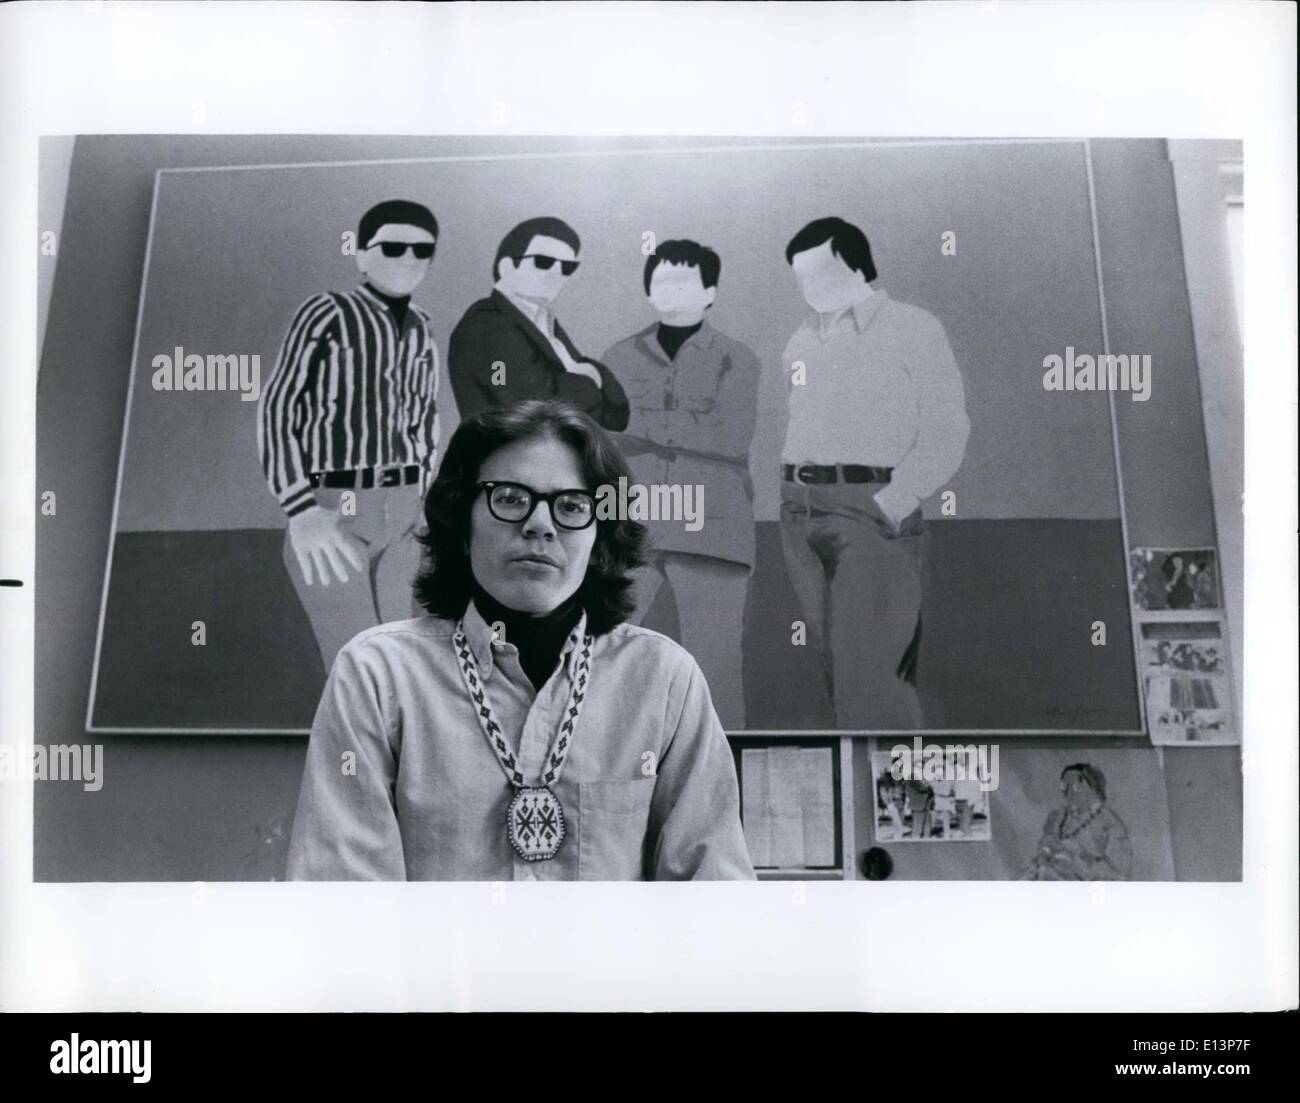 Mar 22, 2012 - Institute of American Indian arts offre straordinarie opportunità culturale didascalia di identificazione. Cree Al Young-man e Foto Stock